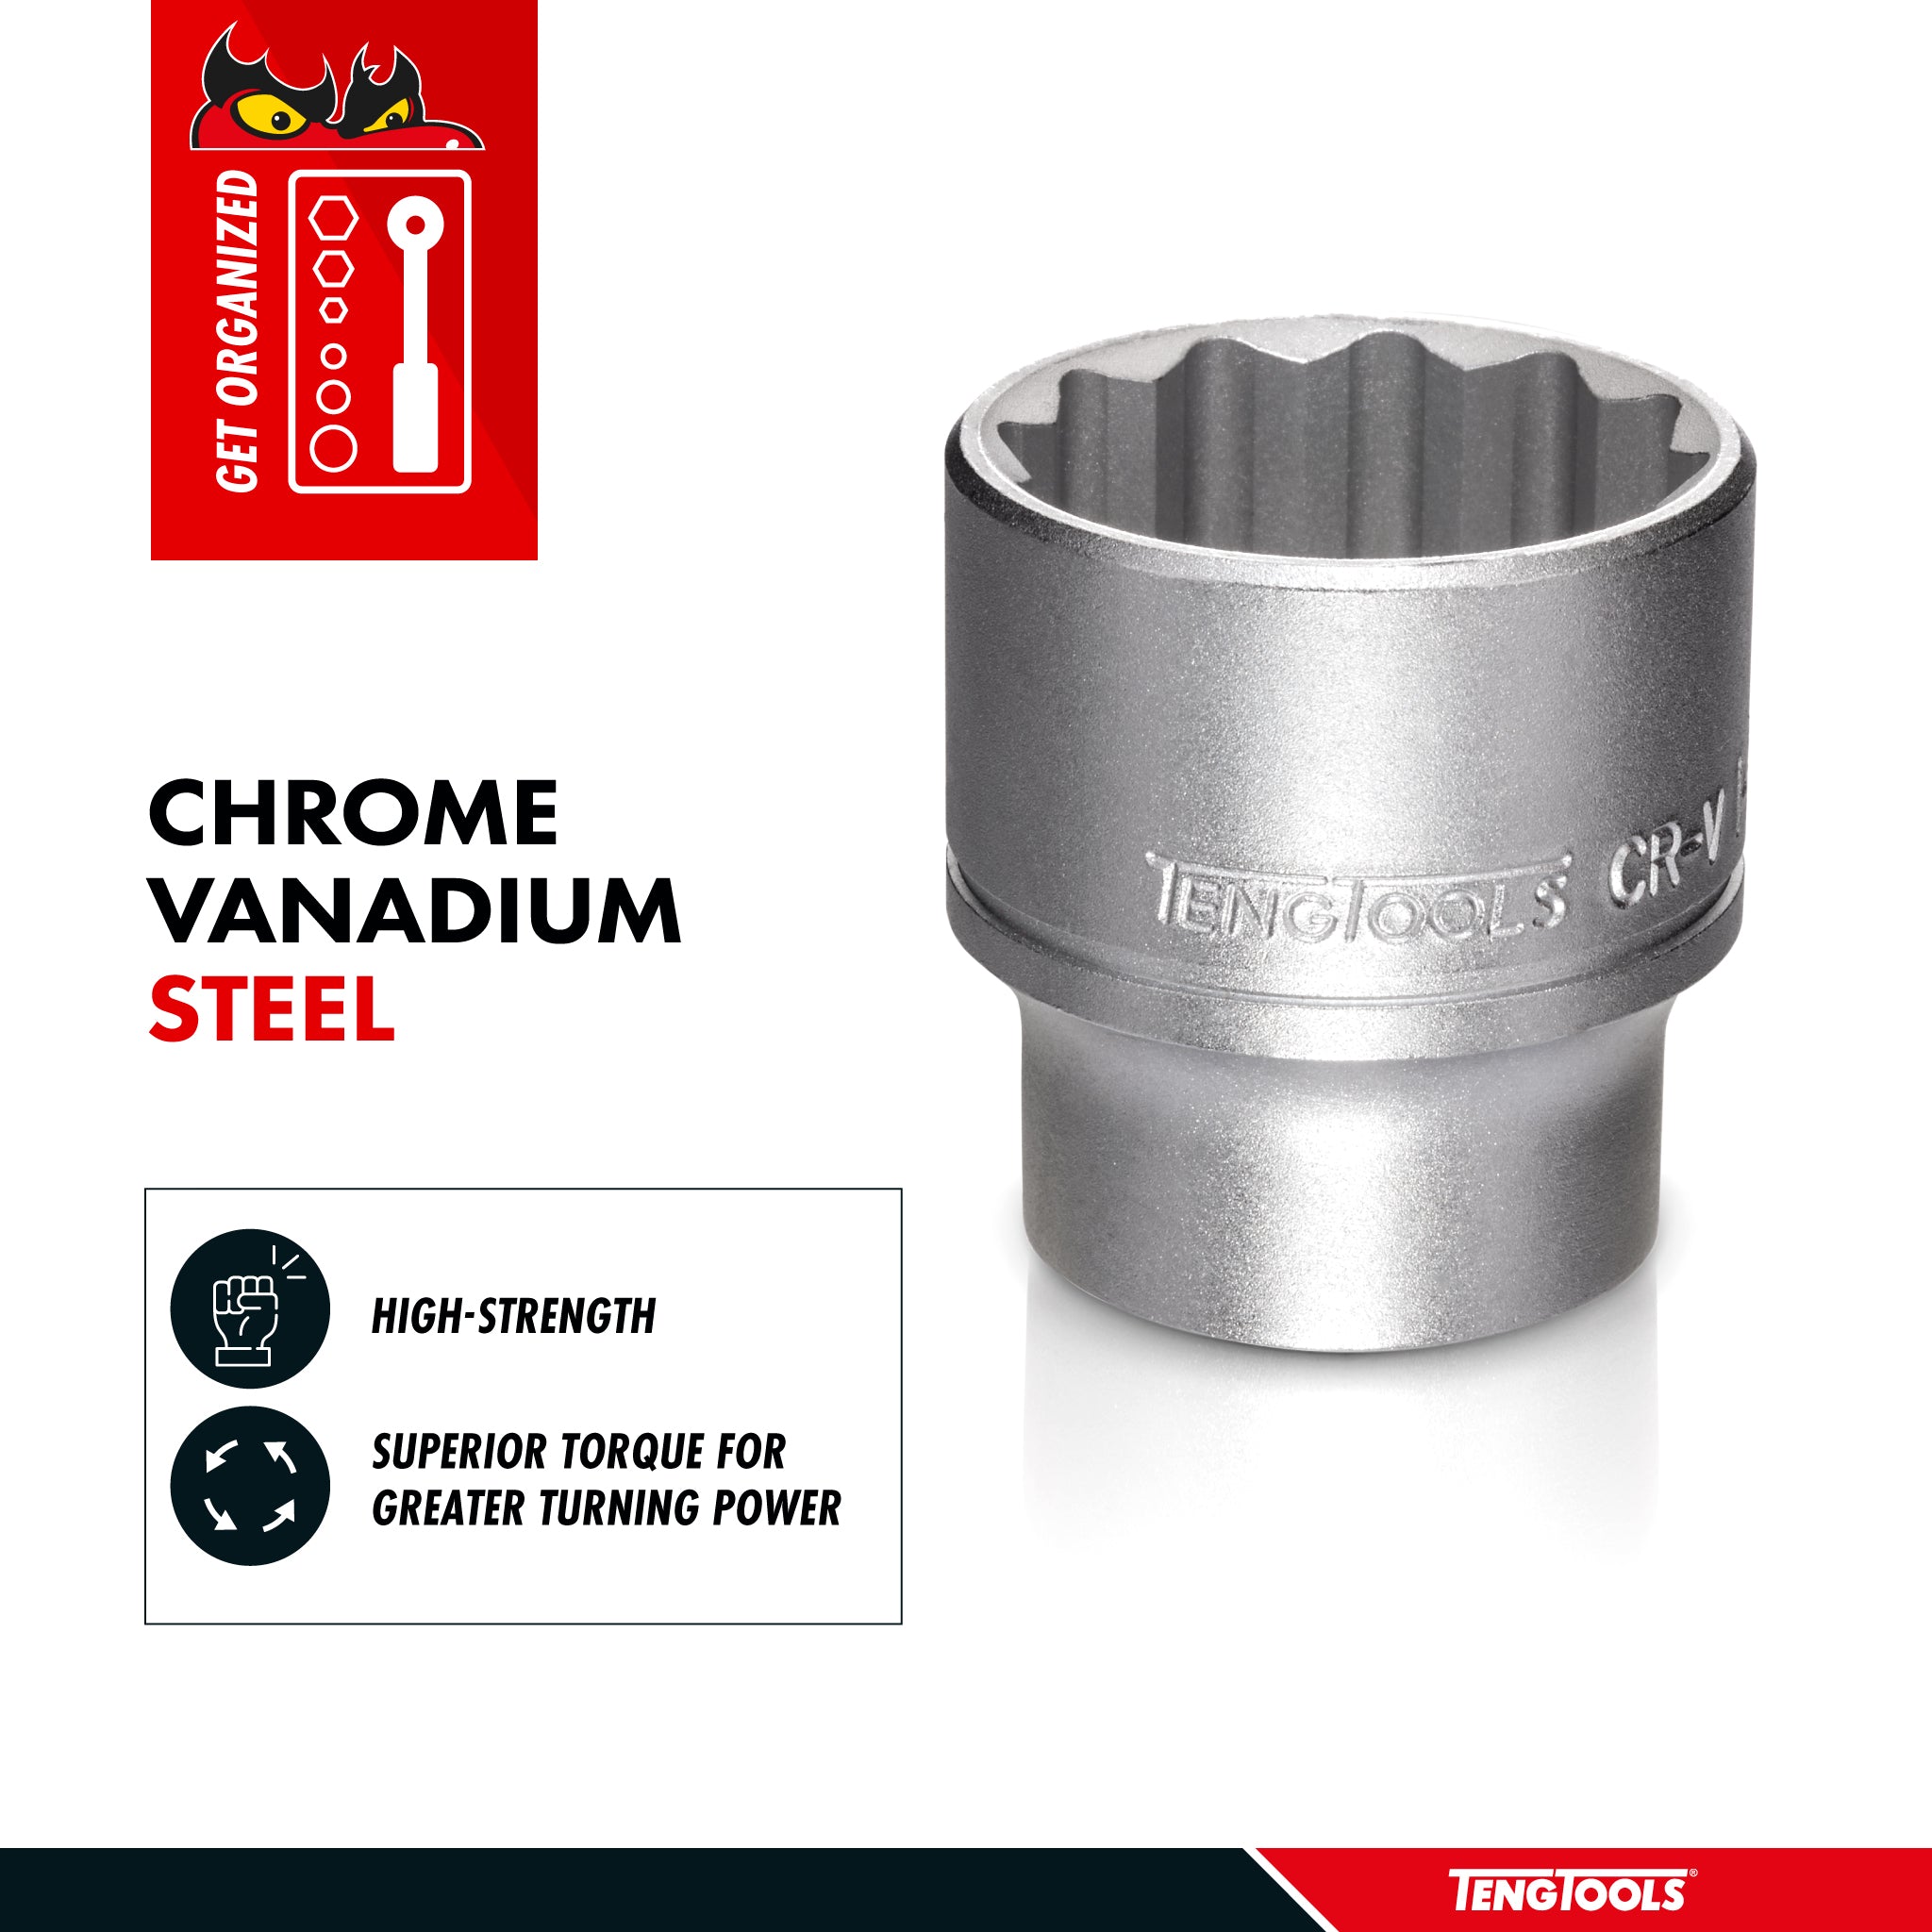 Teng Tools 1/2 Inch Drive 12 Point Metric Shallow Chrome Vanadium Sockets - 20mm